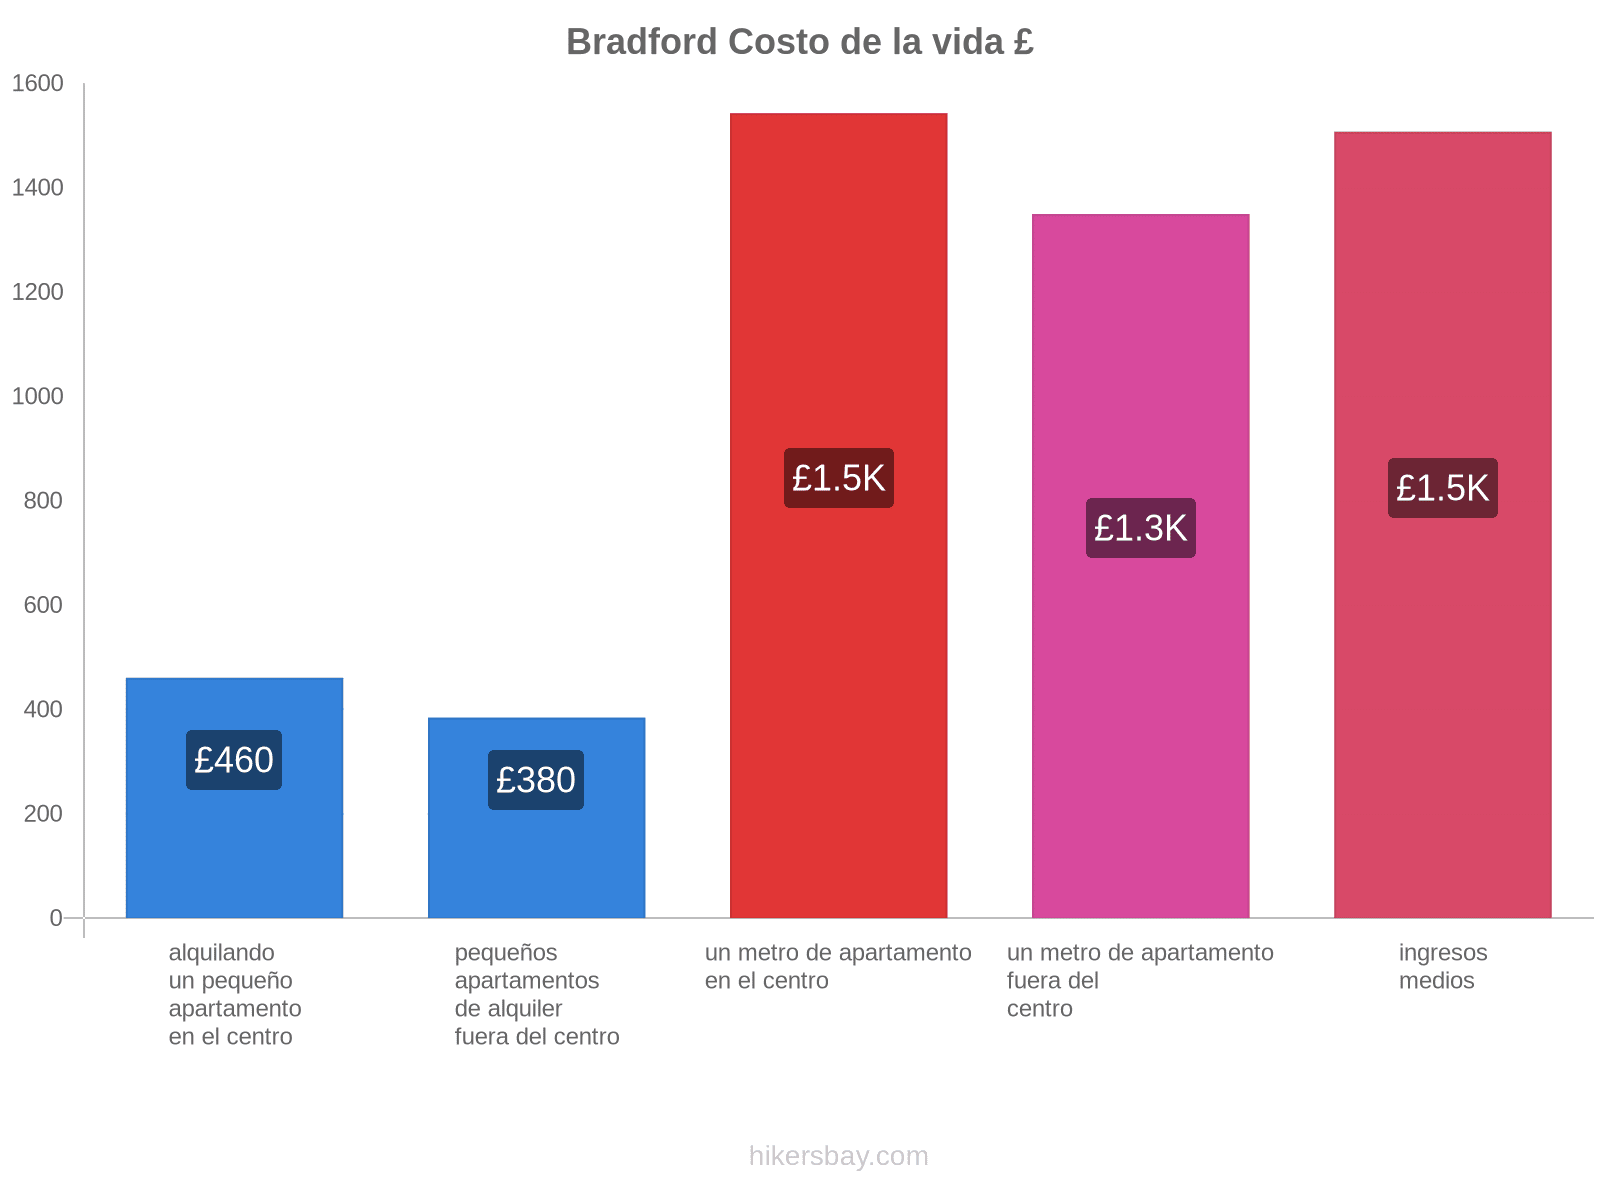 Bradford costo de la vida hikersbay.com